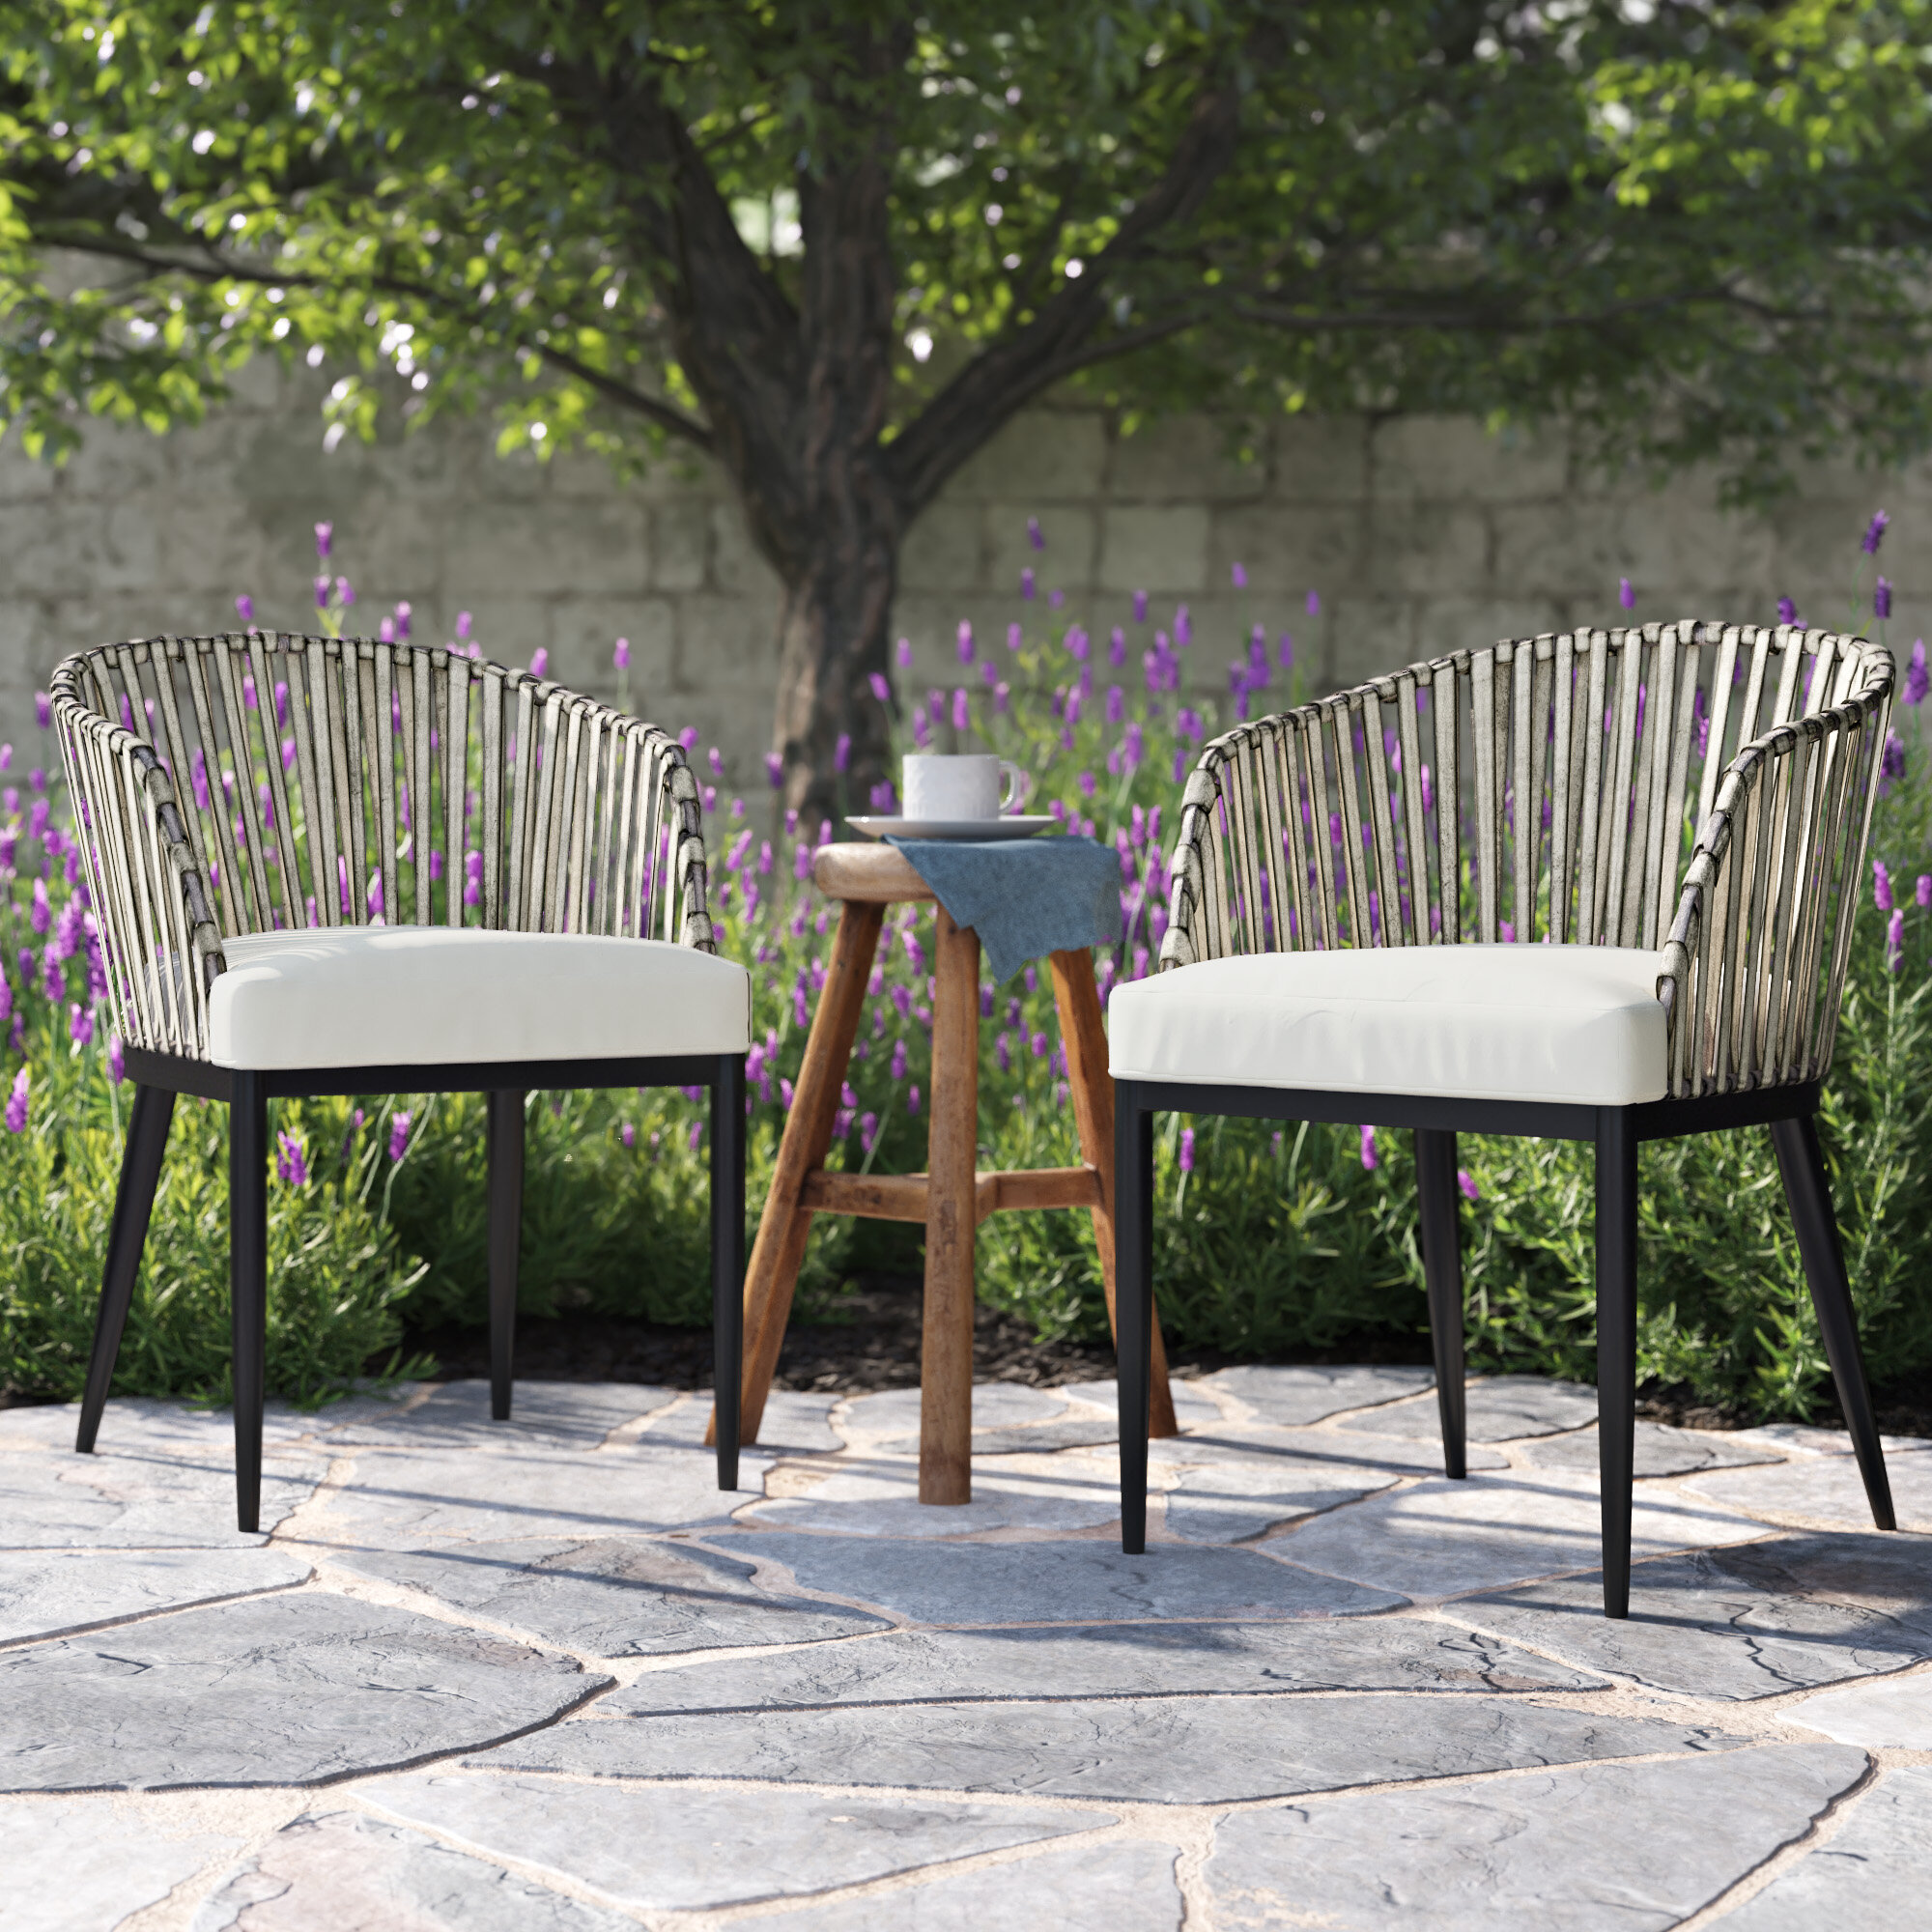 Rattan Patio Garden Bench Outdoor Seat Chair Porch Furniture w/ Seat Cushion 